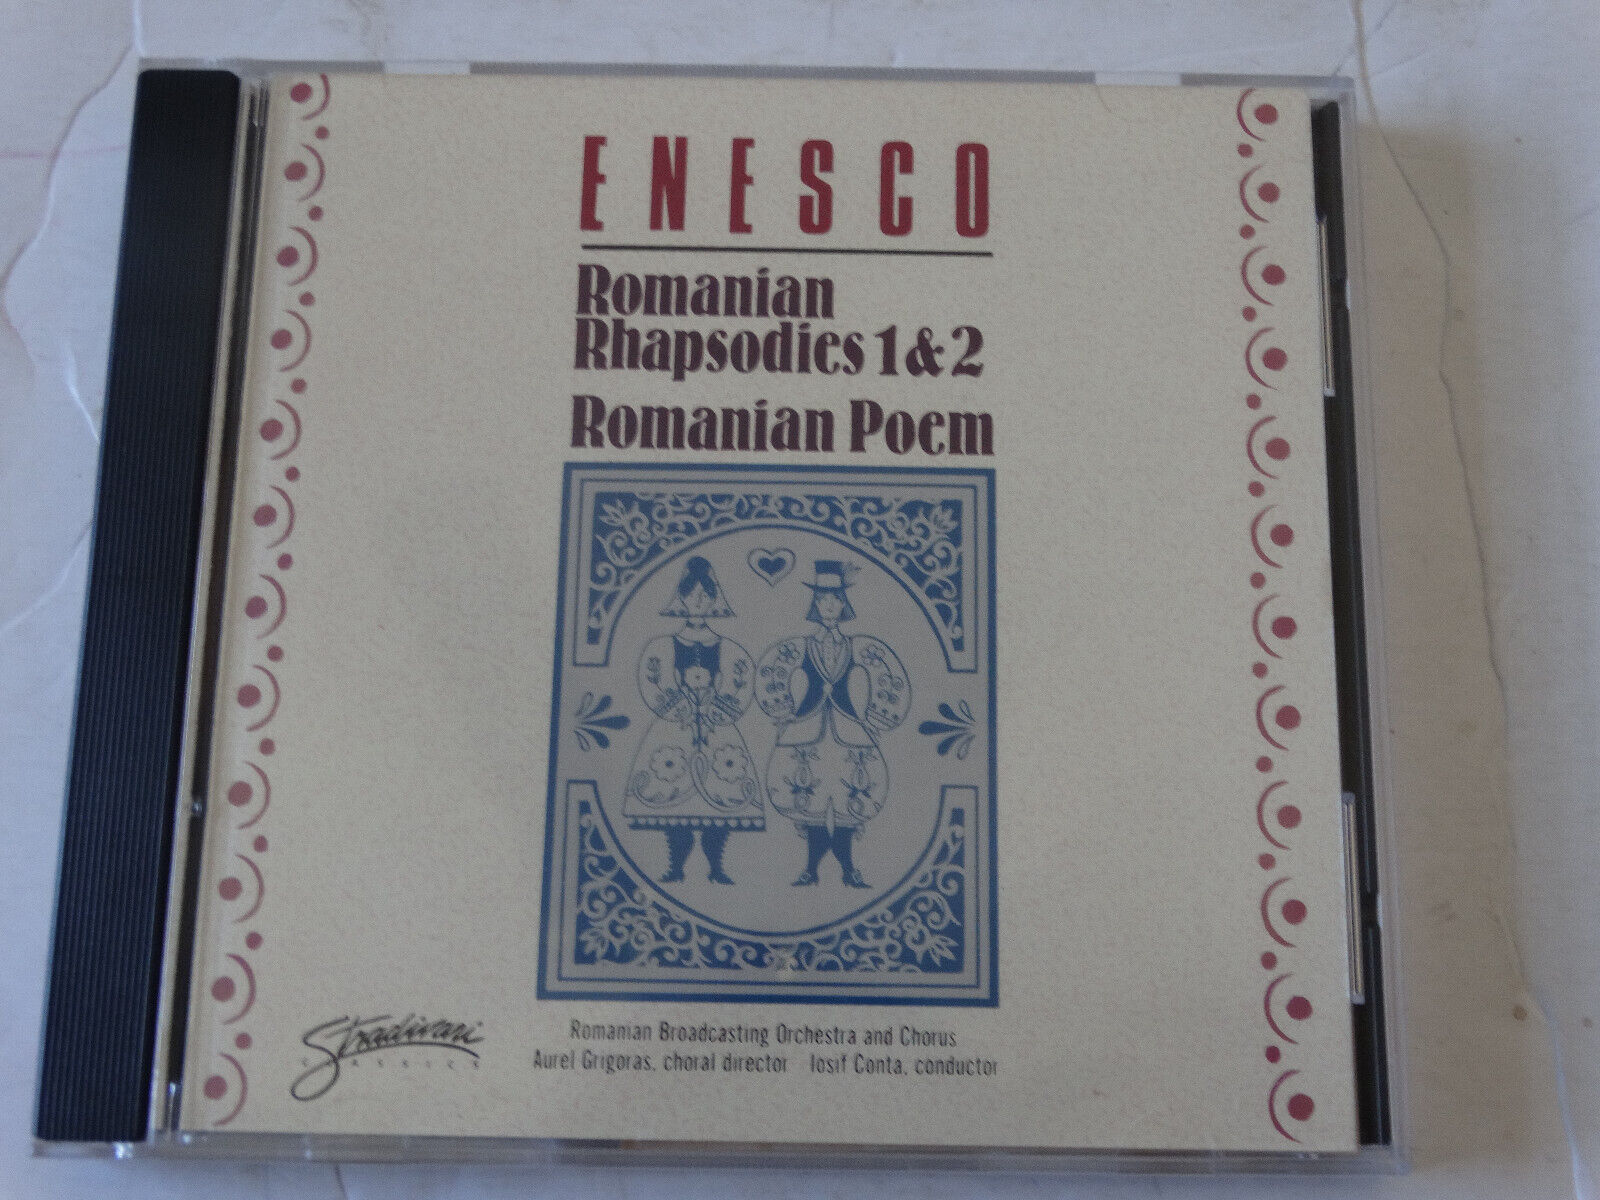 George Enesco Romanian Rhapsodies 1 & 2 Romanian Poem CD Classical Music